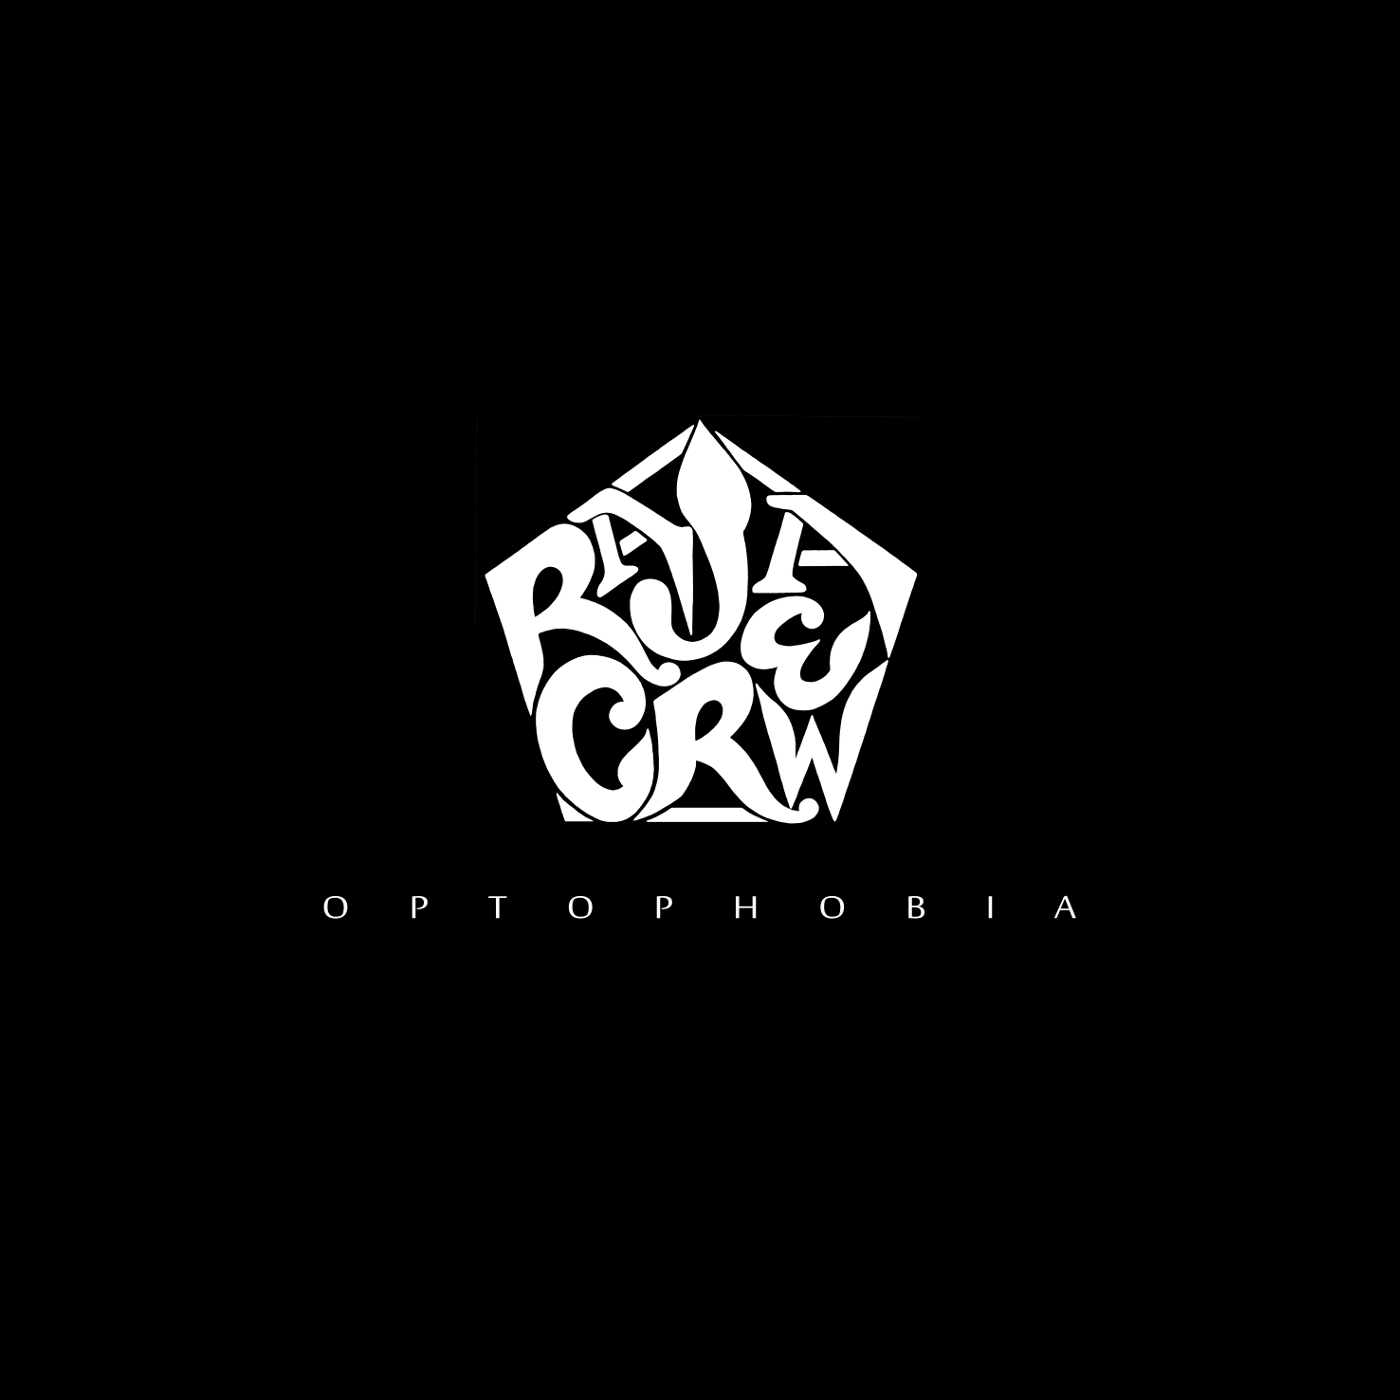 Raja Crew: Optophobia